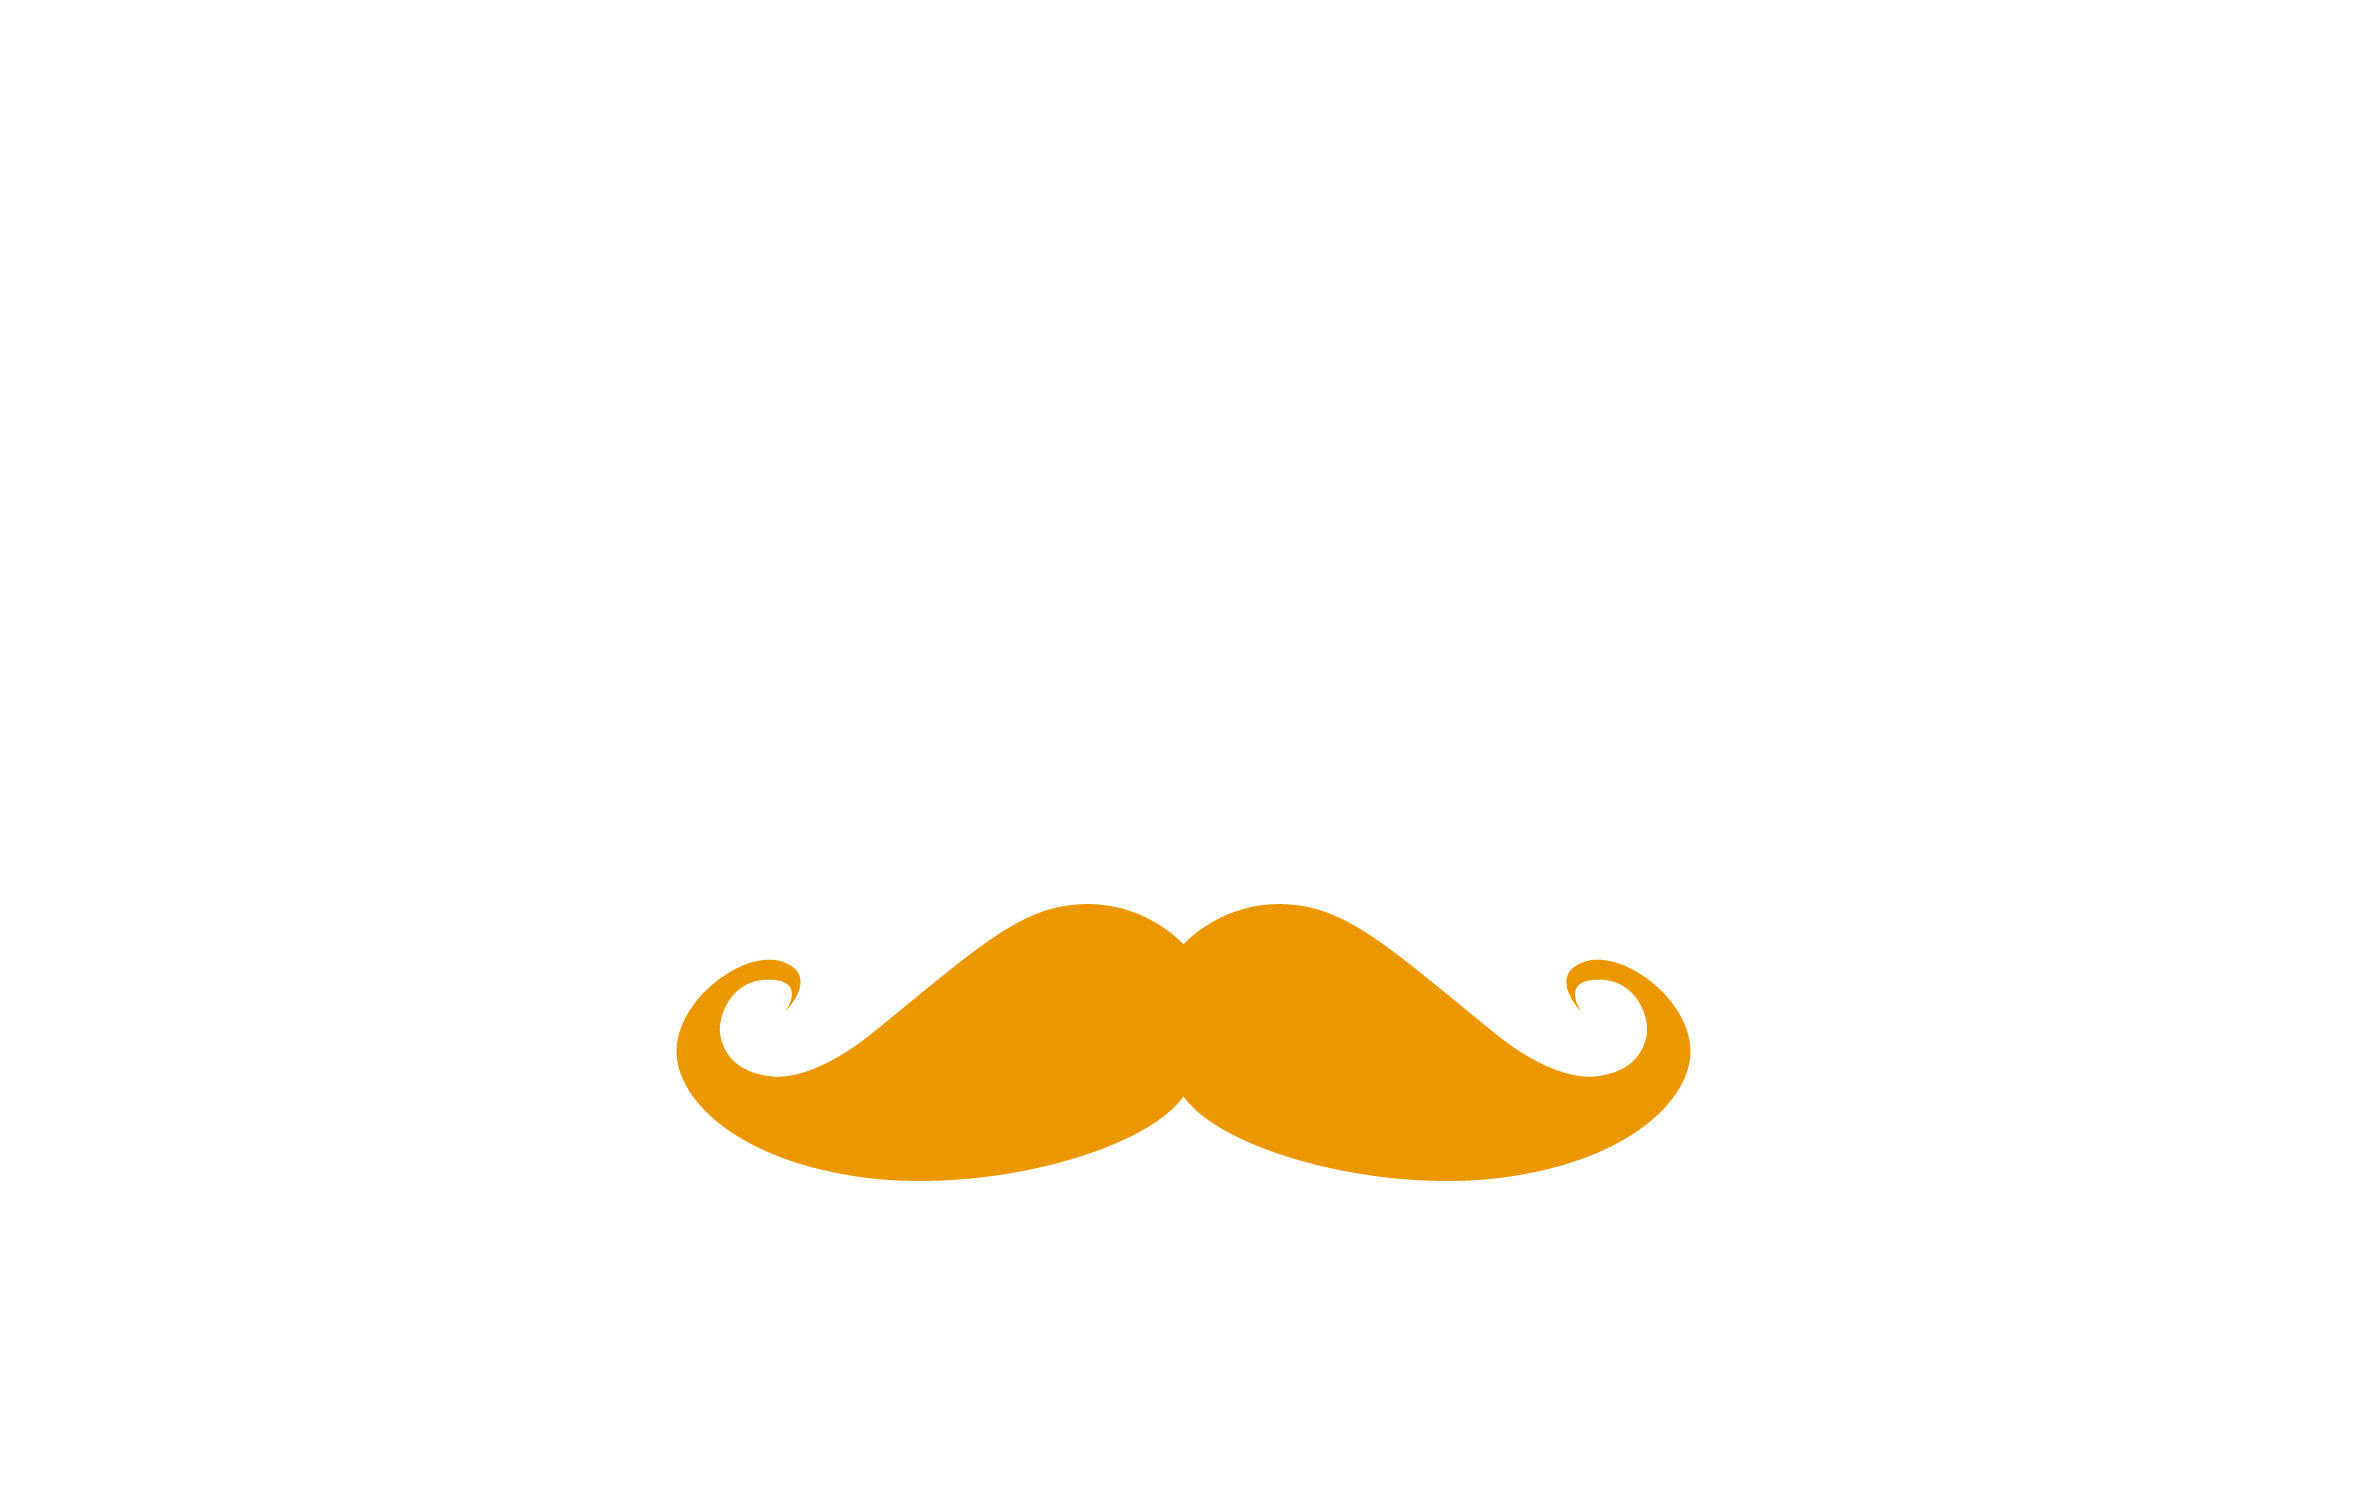 Barbearia São José